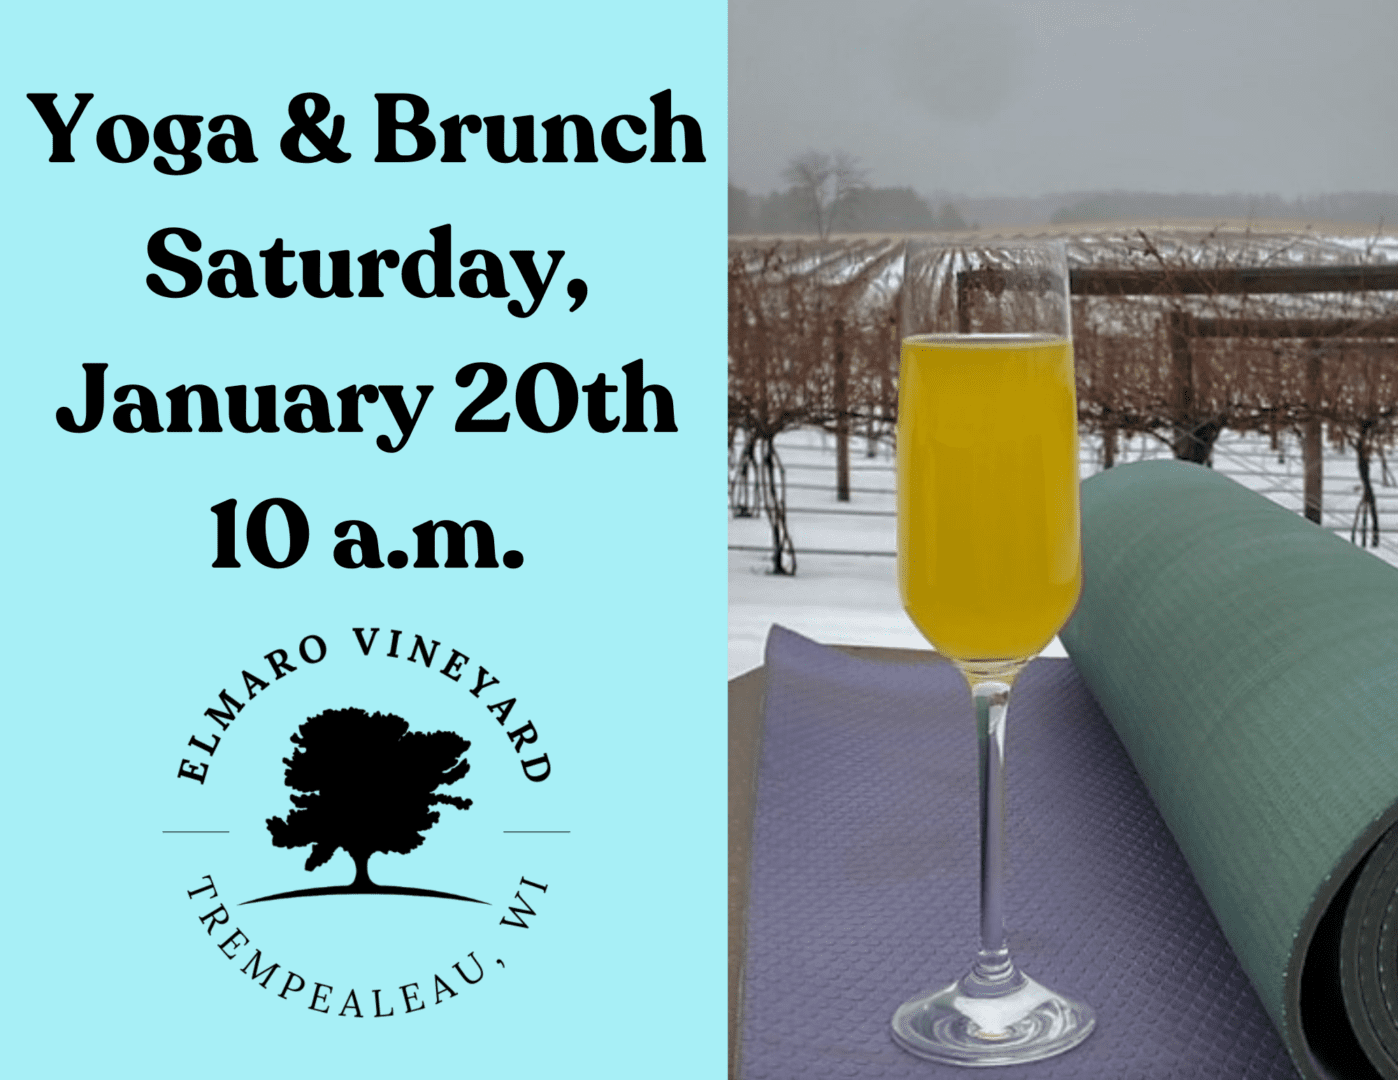 Yoga & Brunch Saturday, January 20th 10 a.m.